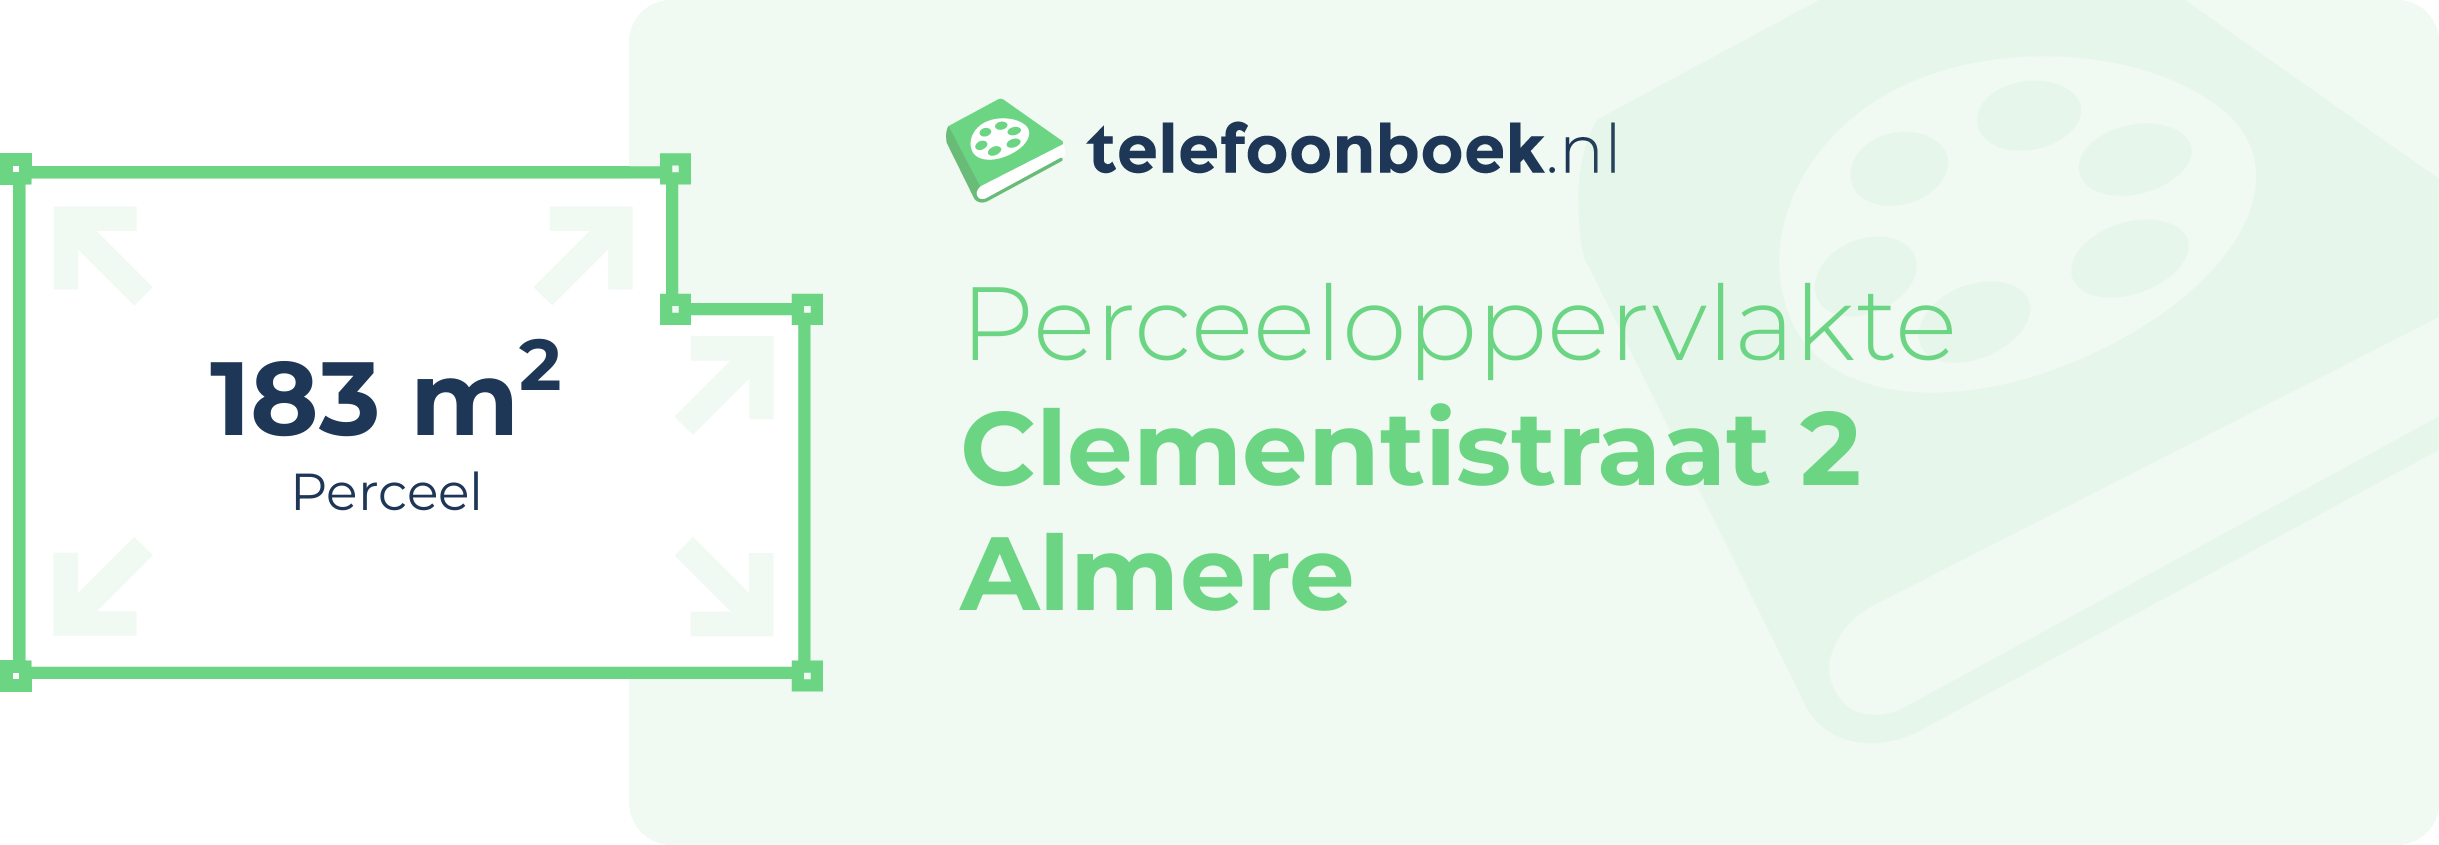 Perceeloppervlakte Clementistraat 2 Almere